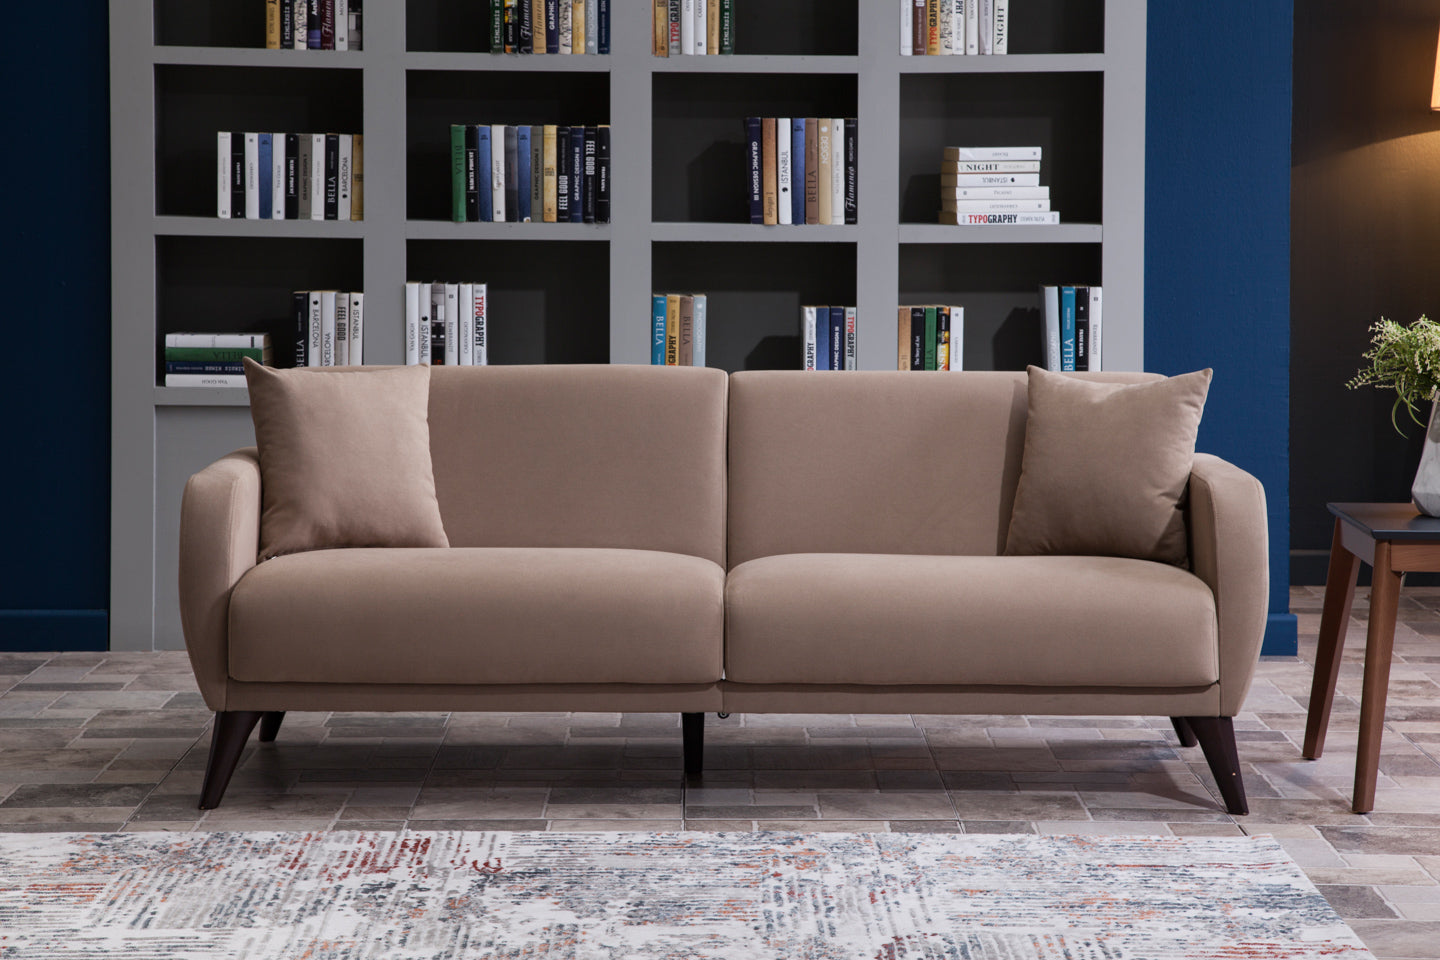 Lelana 78.75'' Sleeper Sofa with Storage Charcoal by Bellona